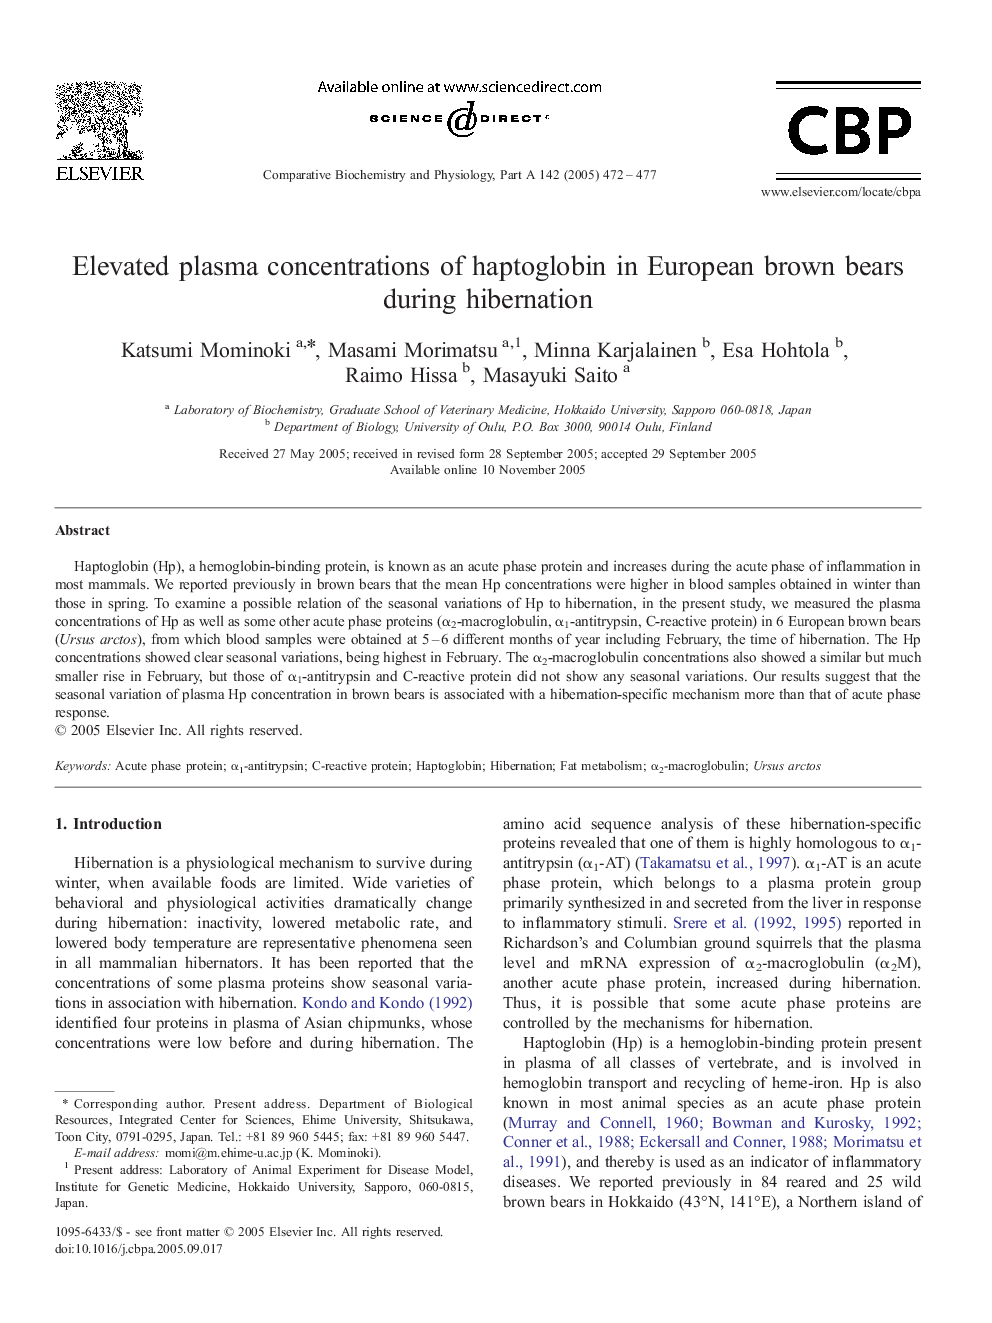 Elevated plasma concentrations of haptoglobin in European brown bears during hibernation